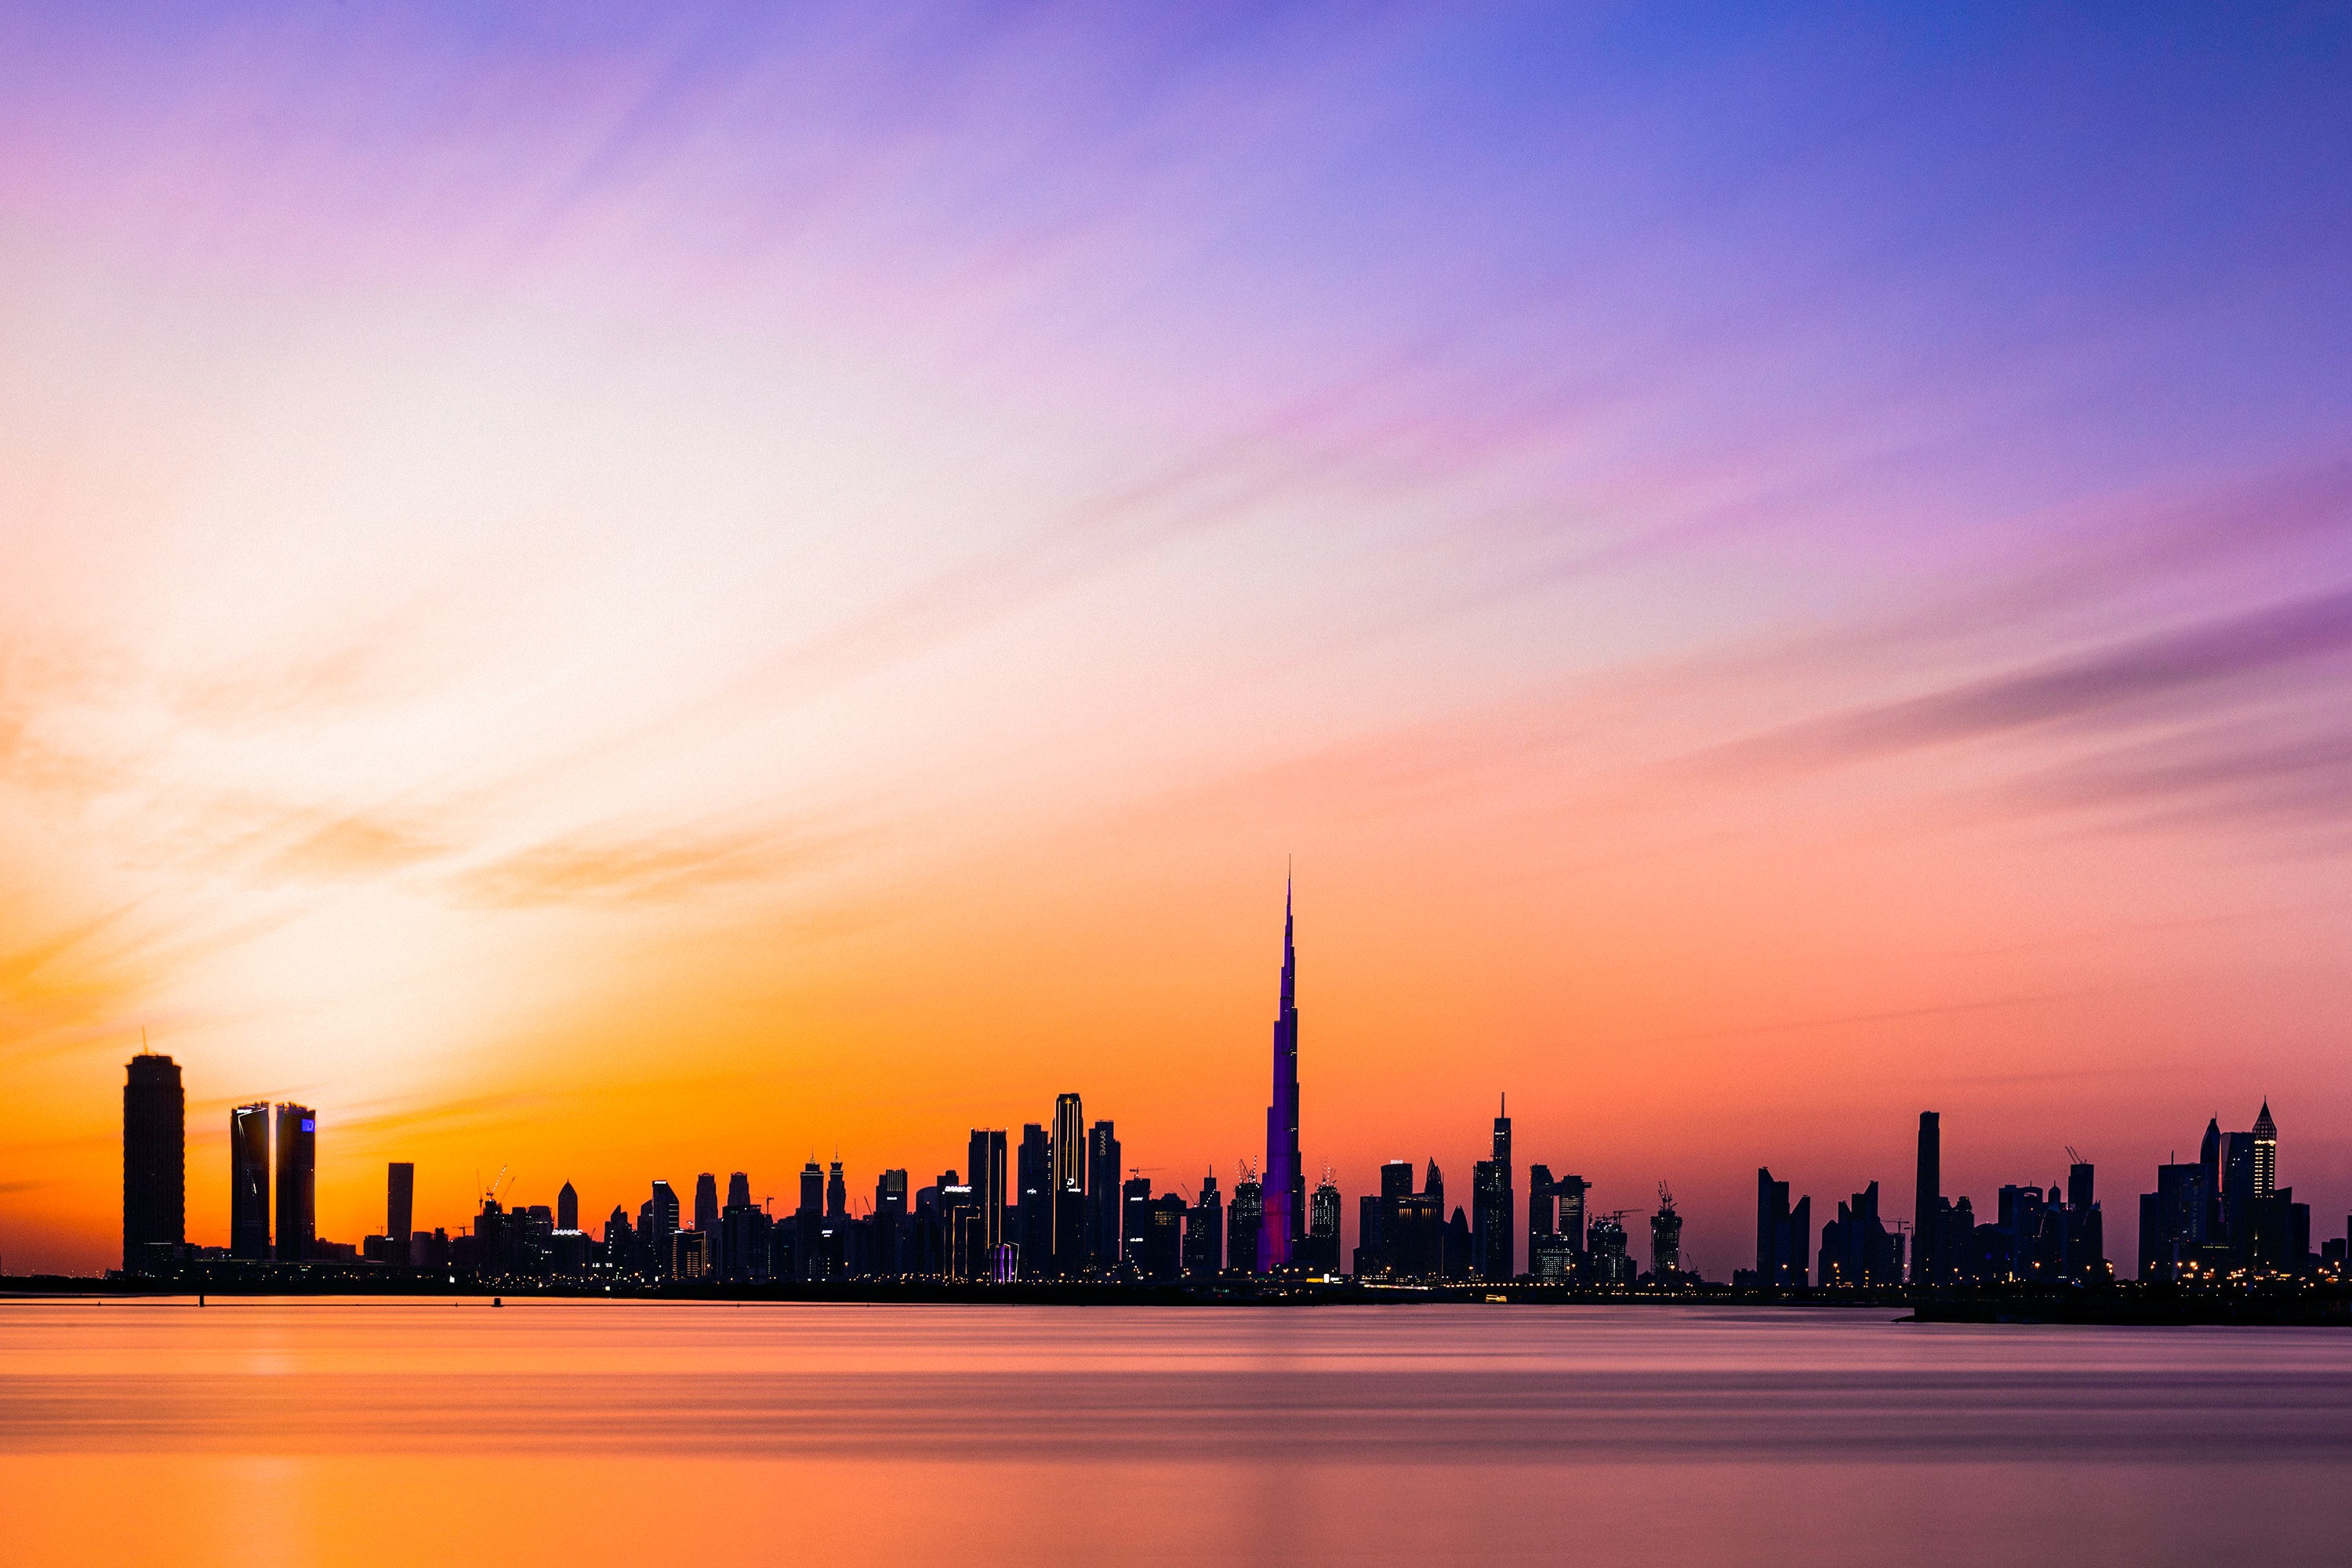 Dubai photos download the best free dubai stock photos hd images